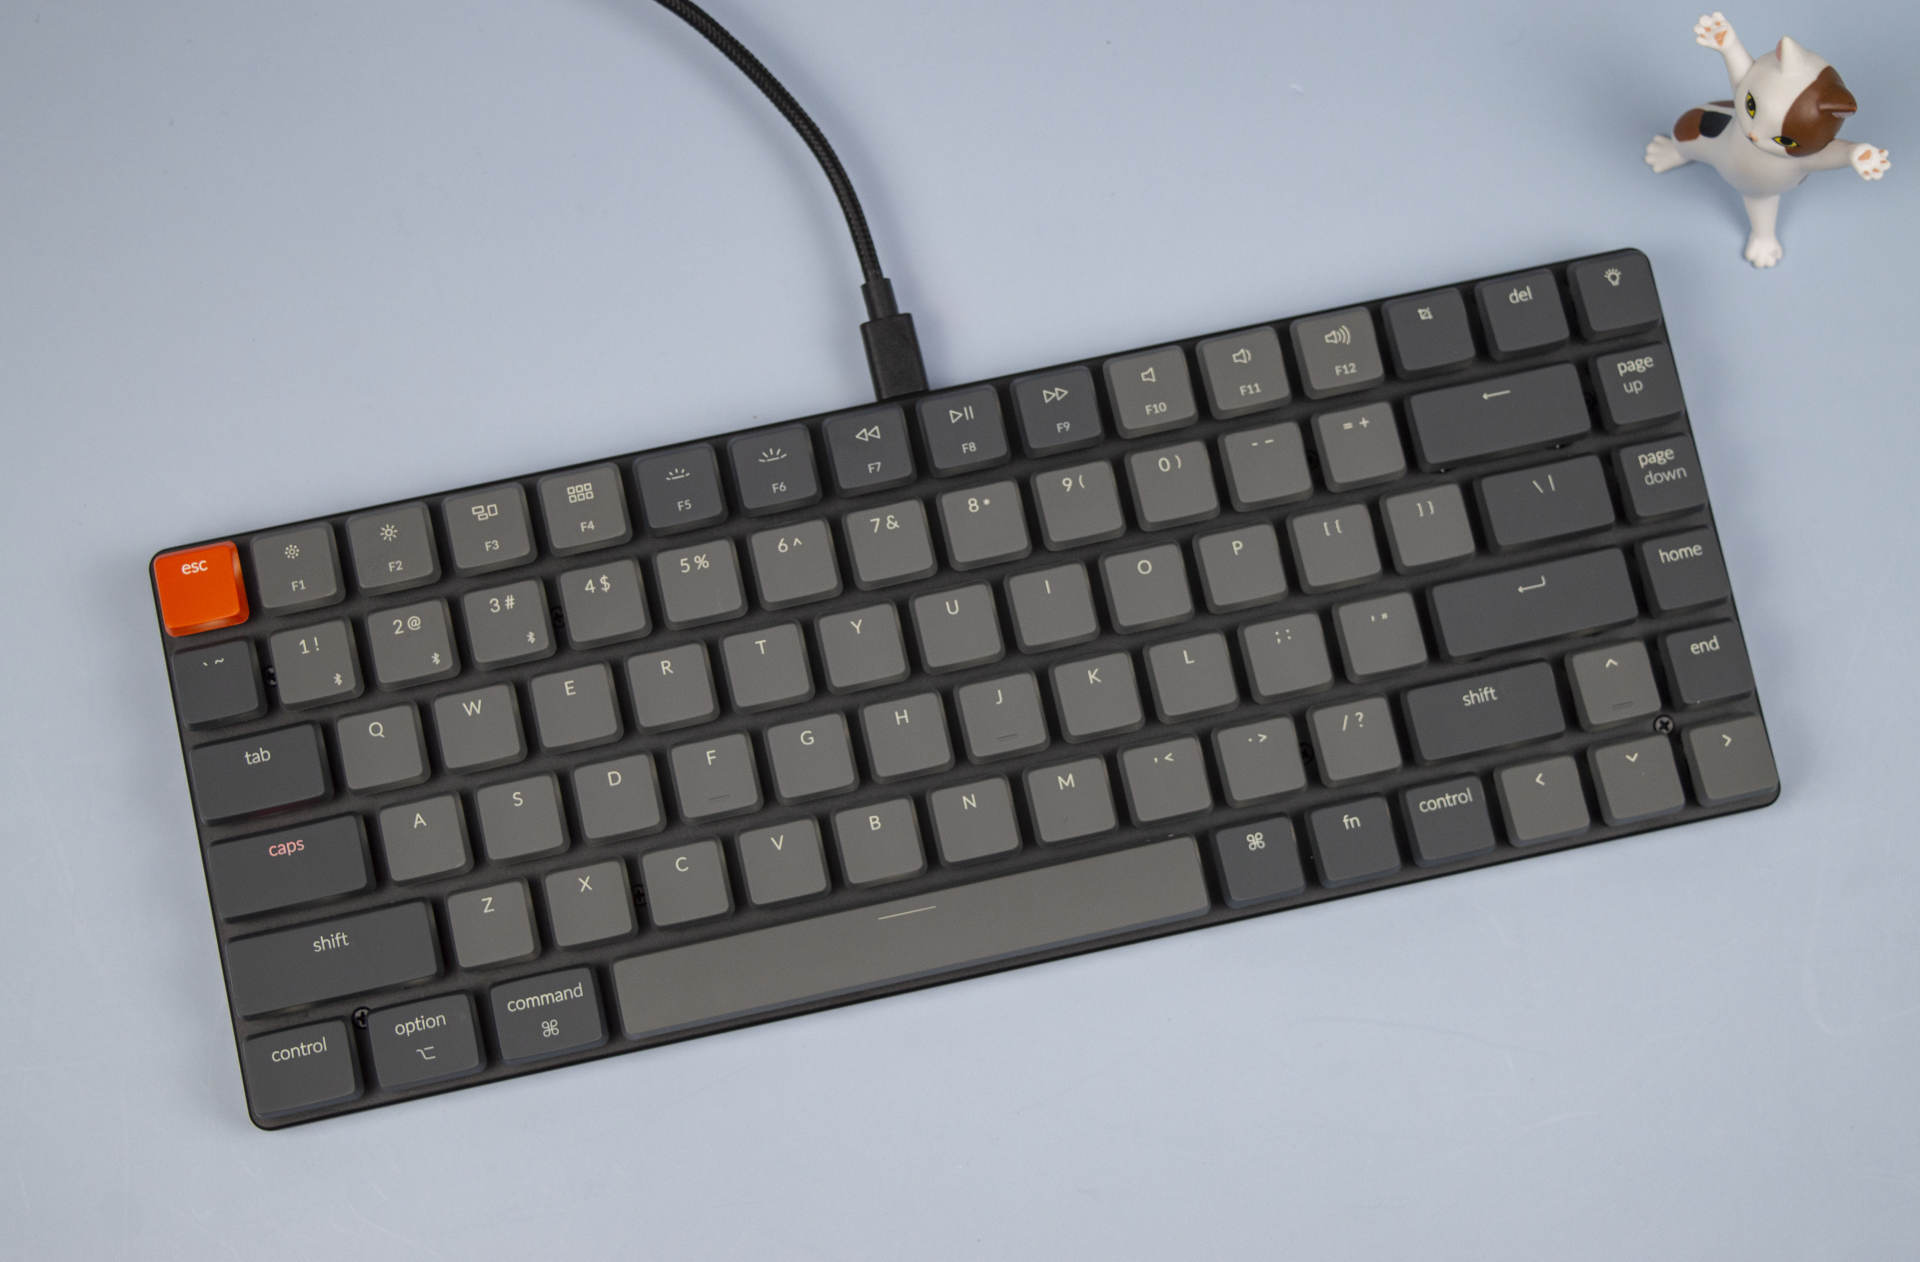 mac友好,极简时尚:keychron k3 超轻薄矮轴机械键盘上手体验